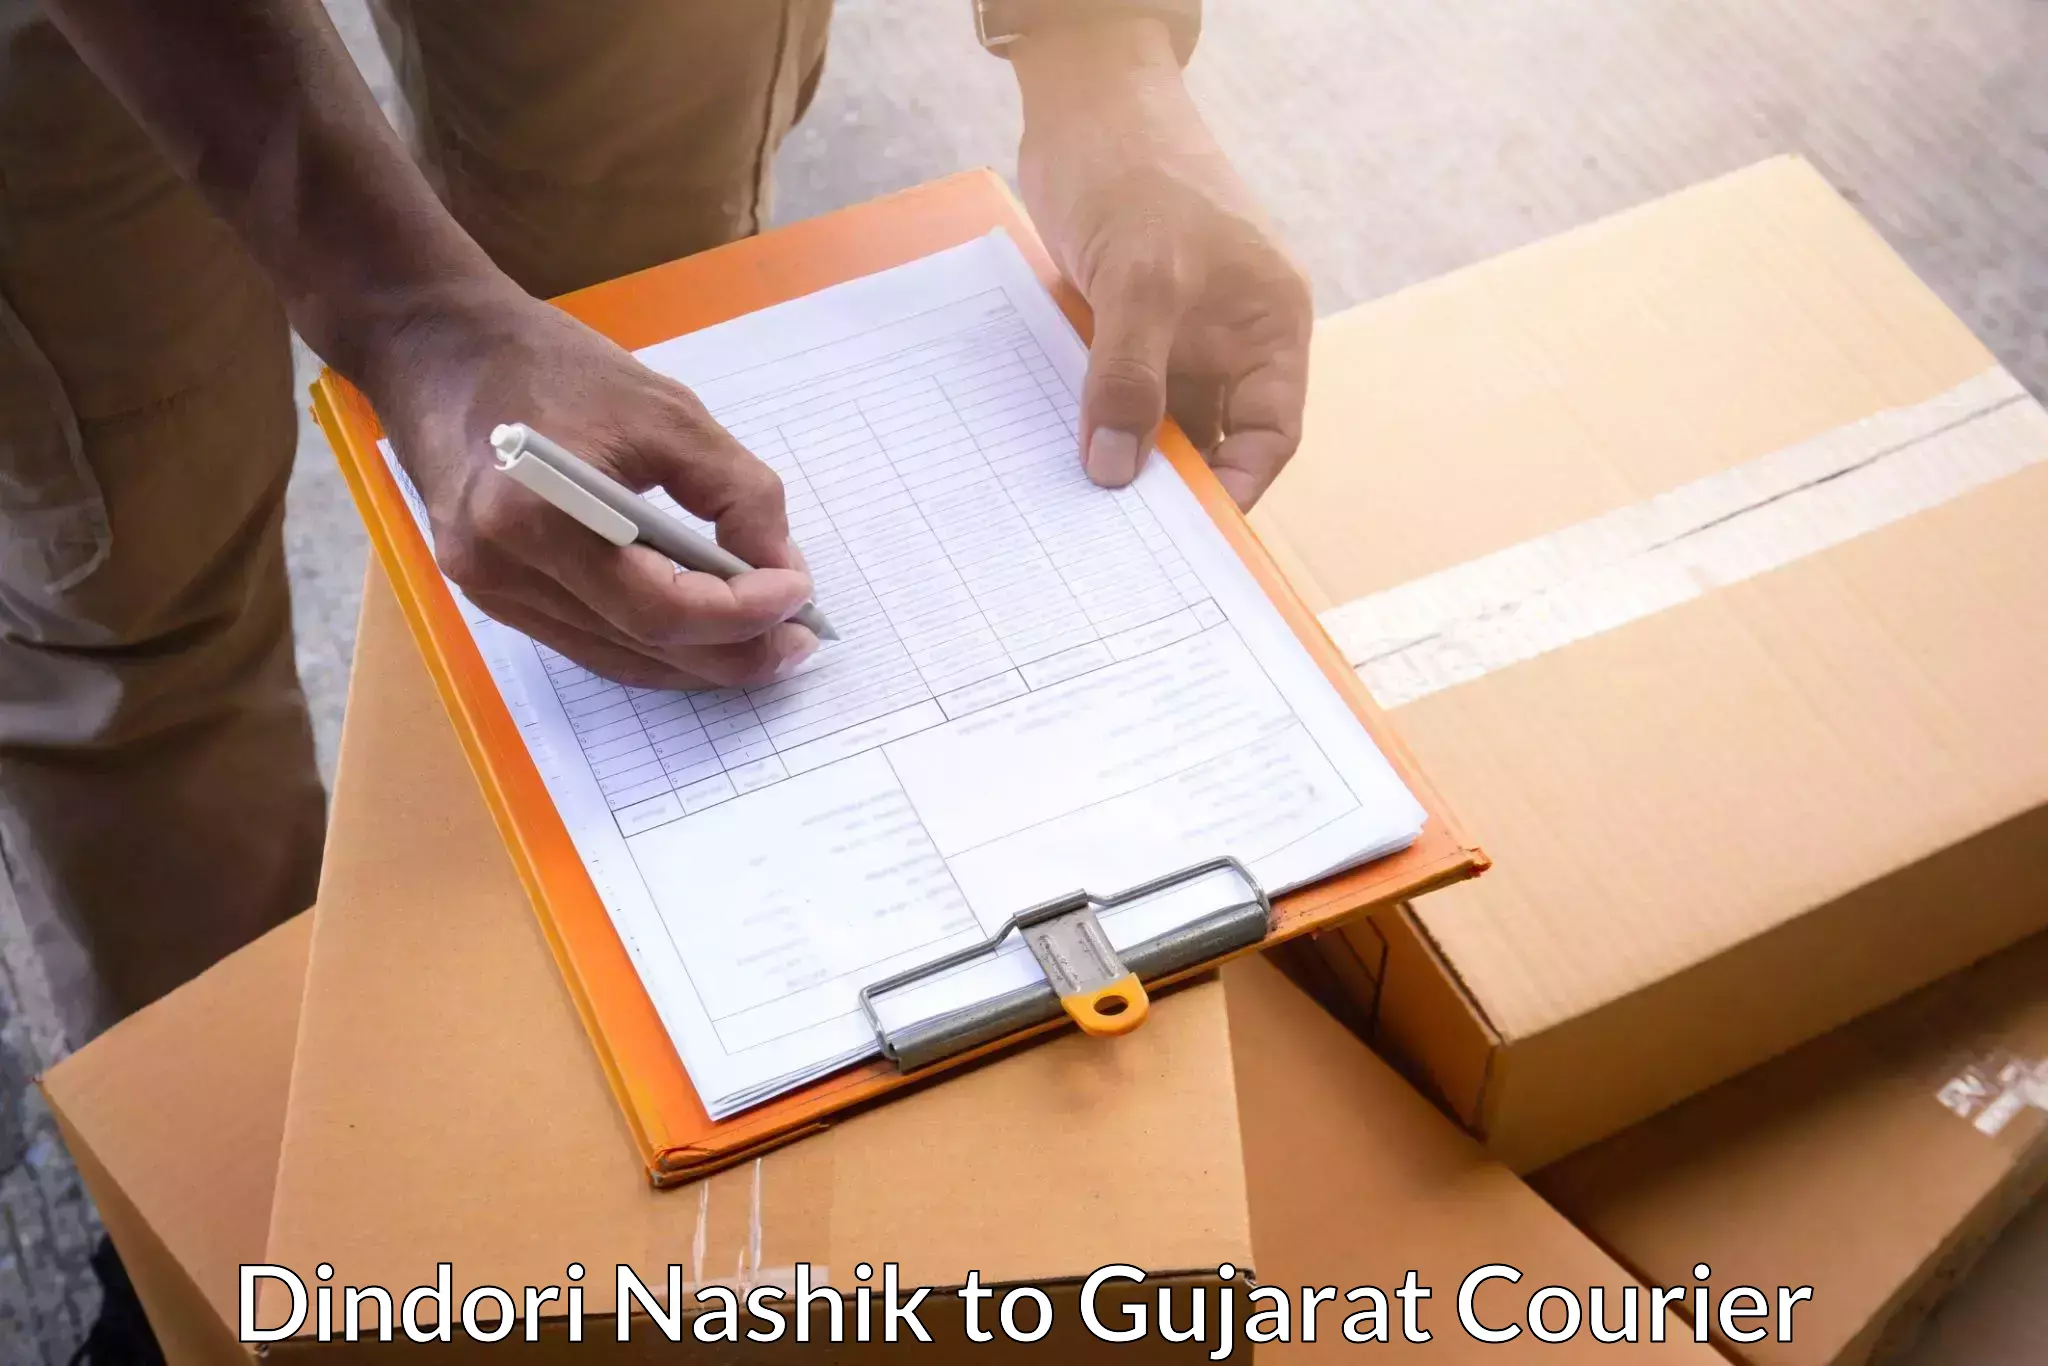 Courier service partnerships Dindori Nashik to Wankaner